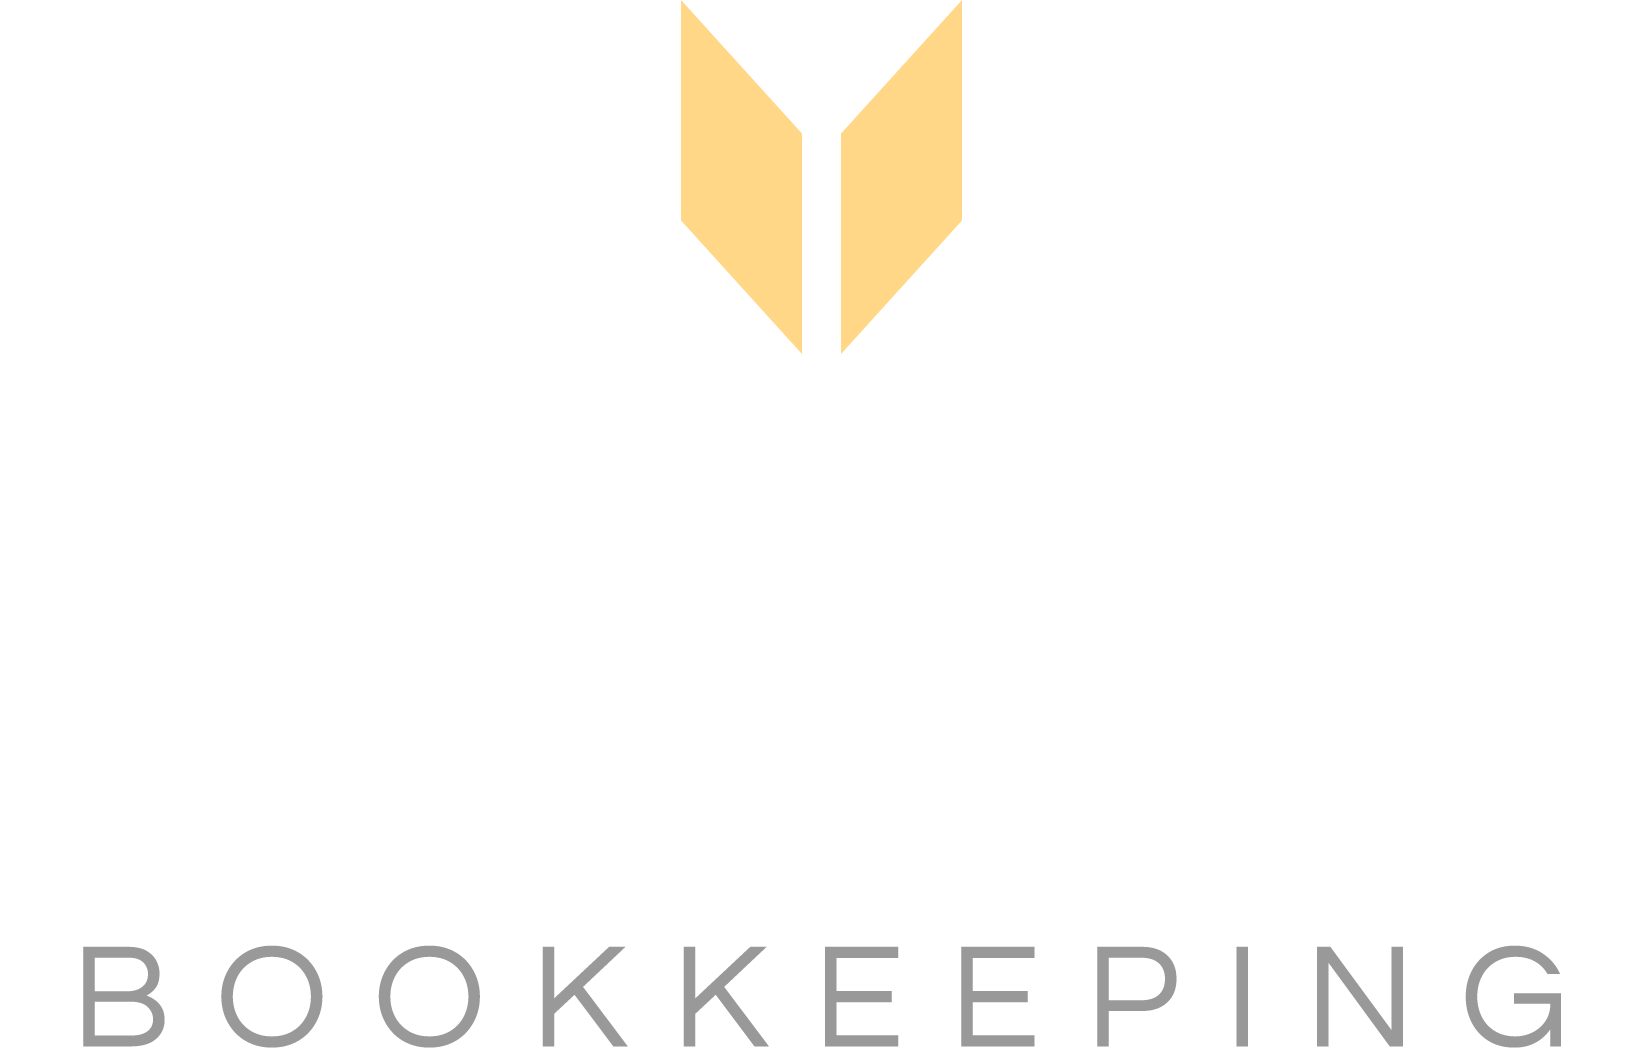 Sydney Bookkeeping - Accounting, Accountants, BAS, Chatswood, Sydney, Australia